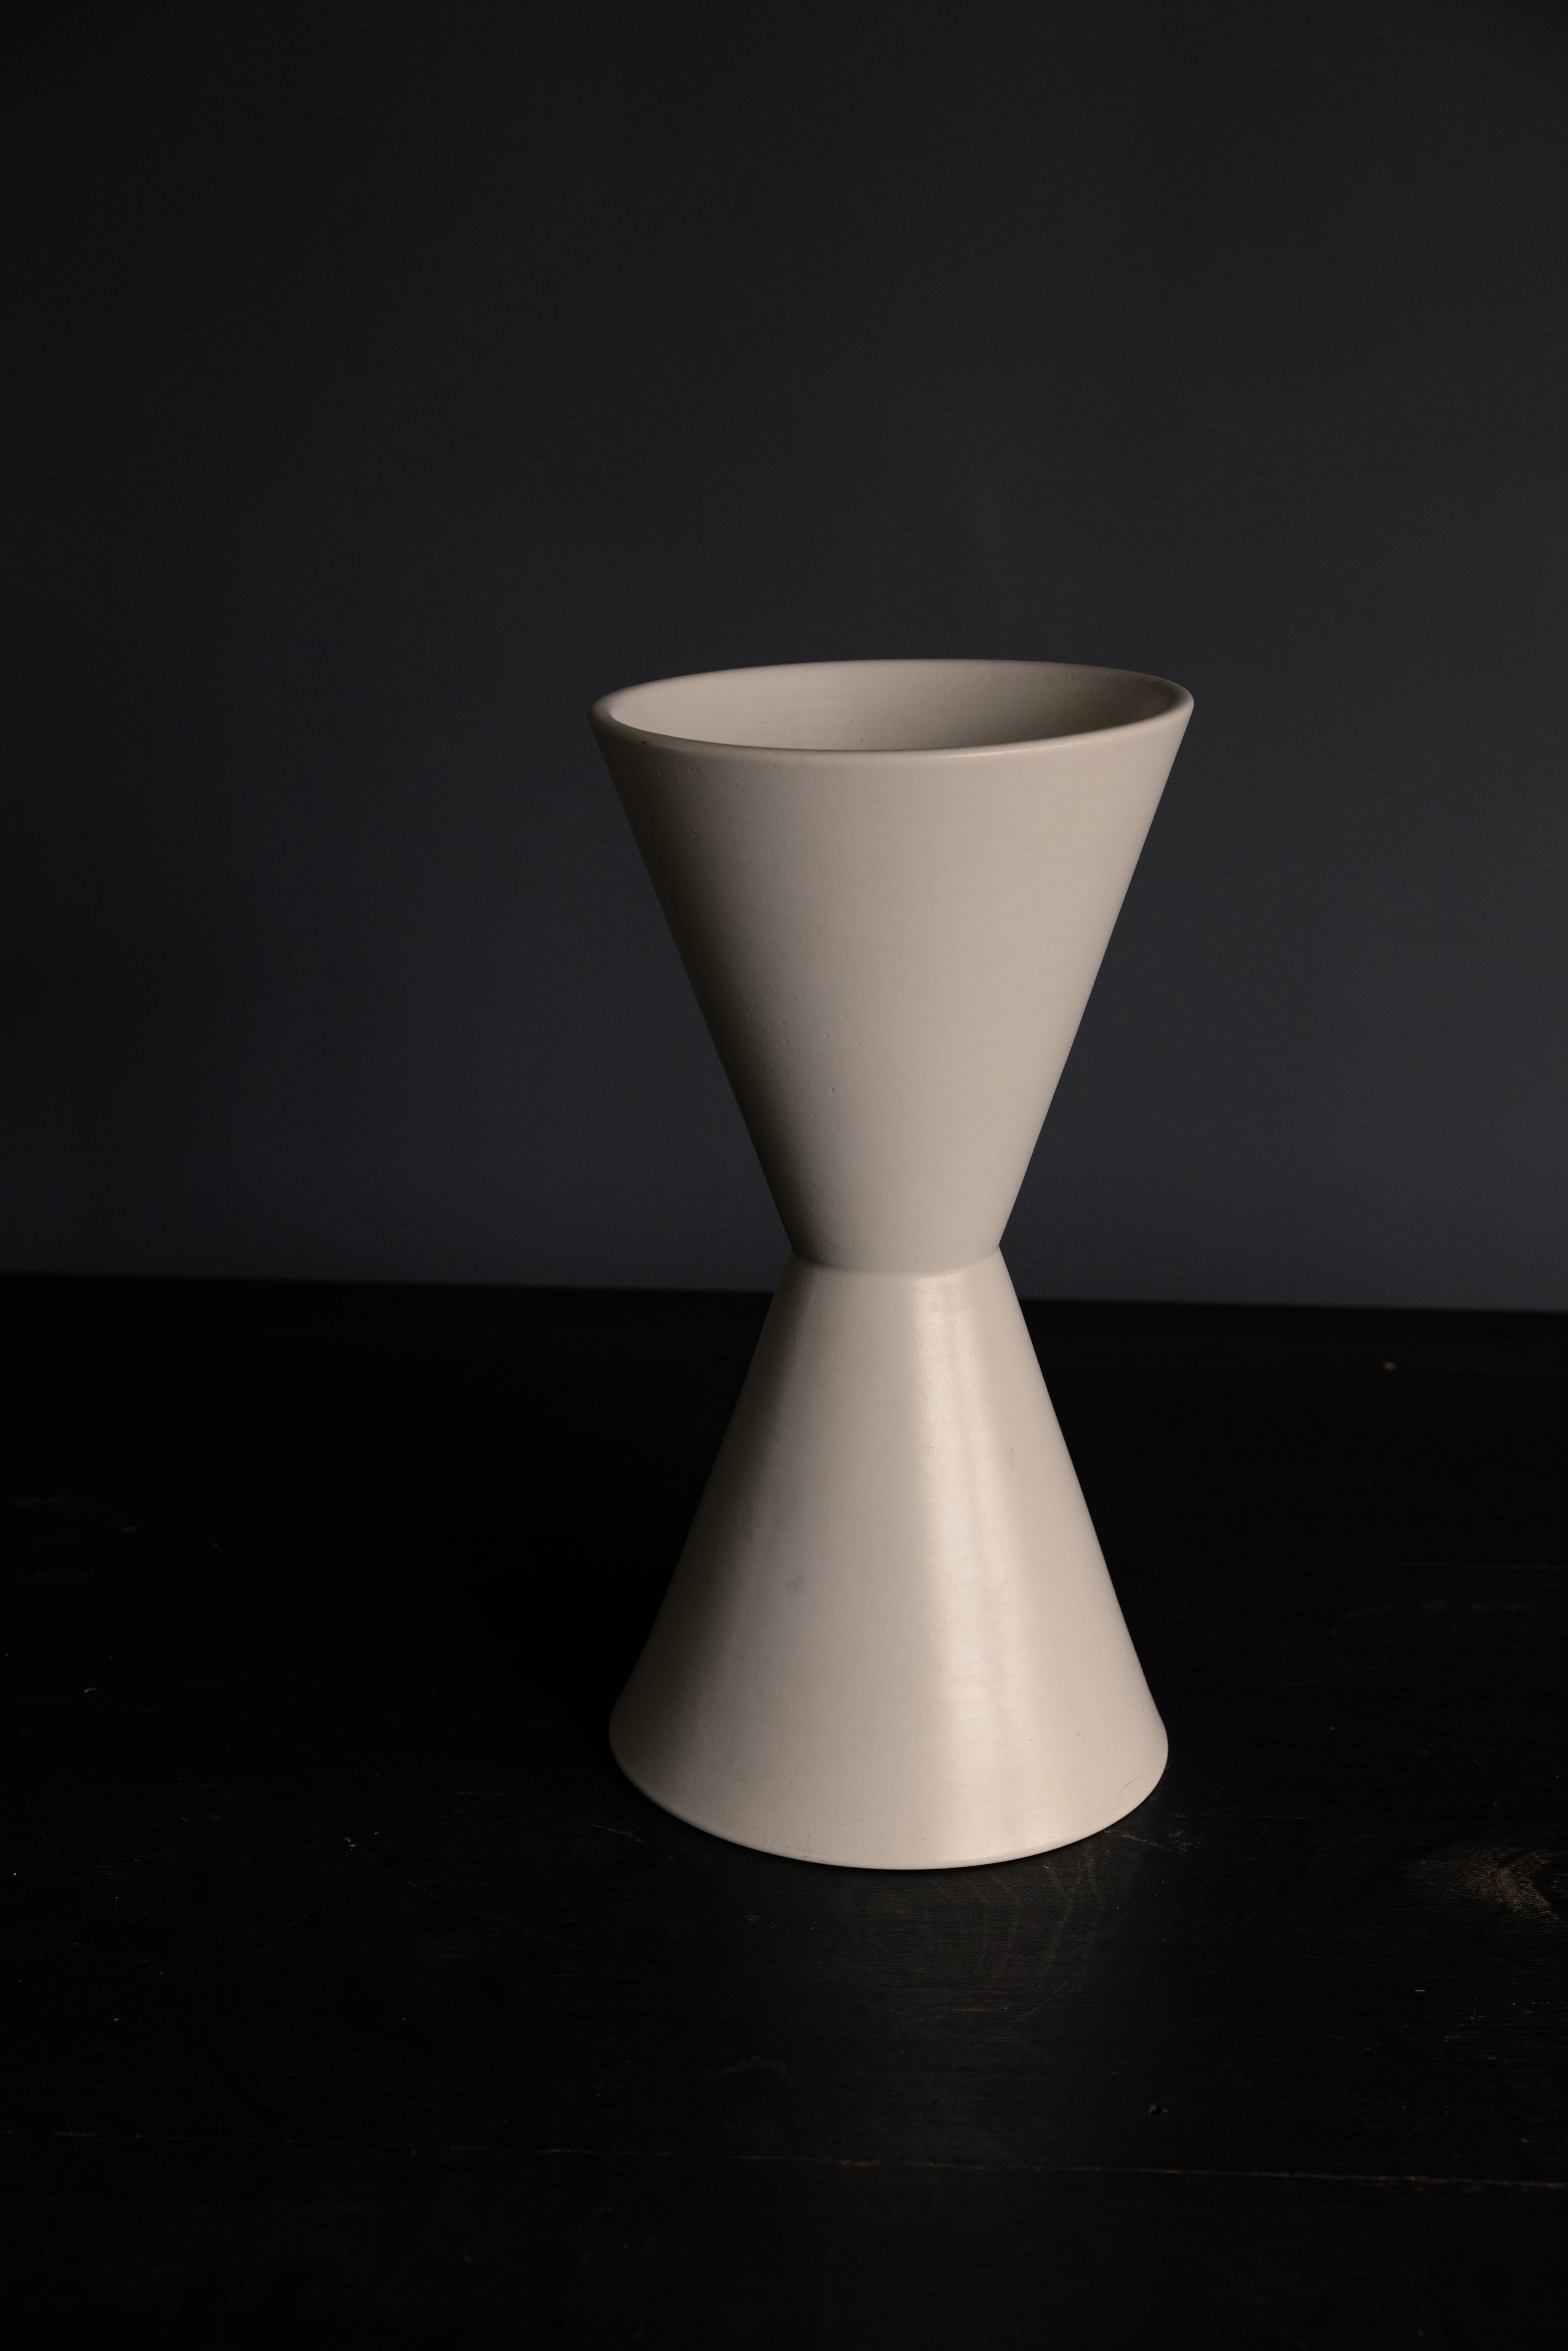 Model T-102 Planter by Lagardo Tackett for Architectural Pottery, Midcentury, USA
White Matte Glaze

H 20